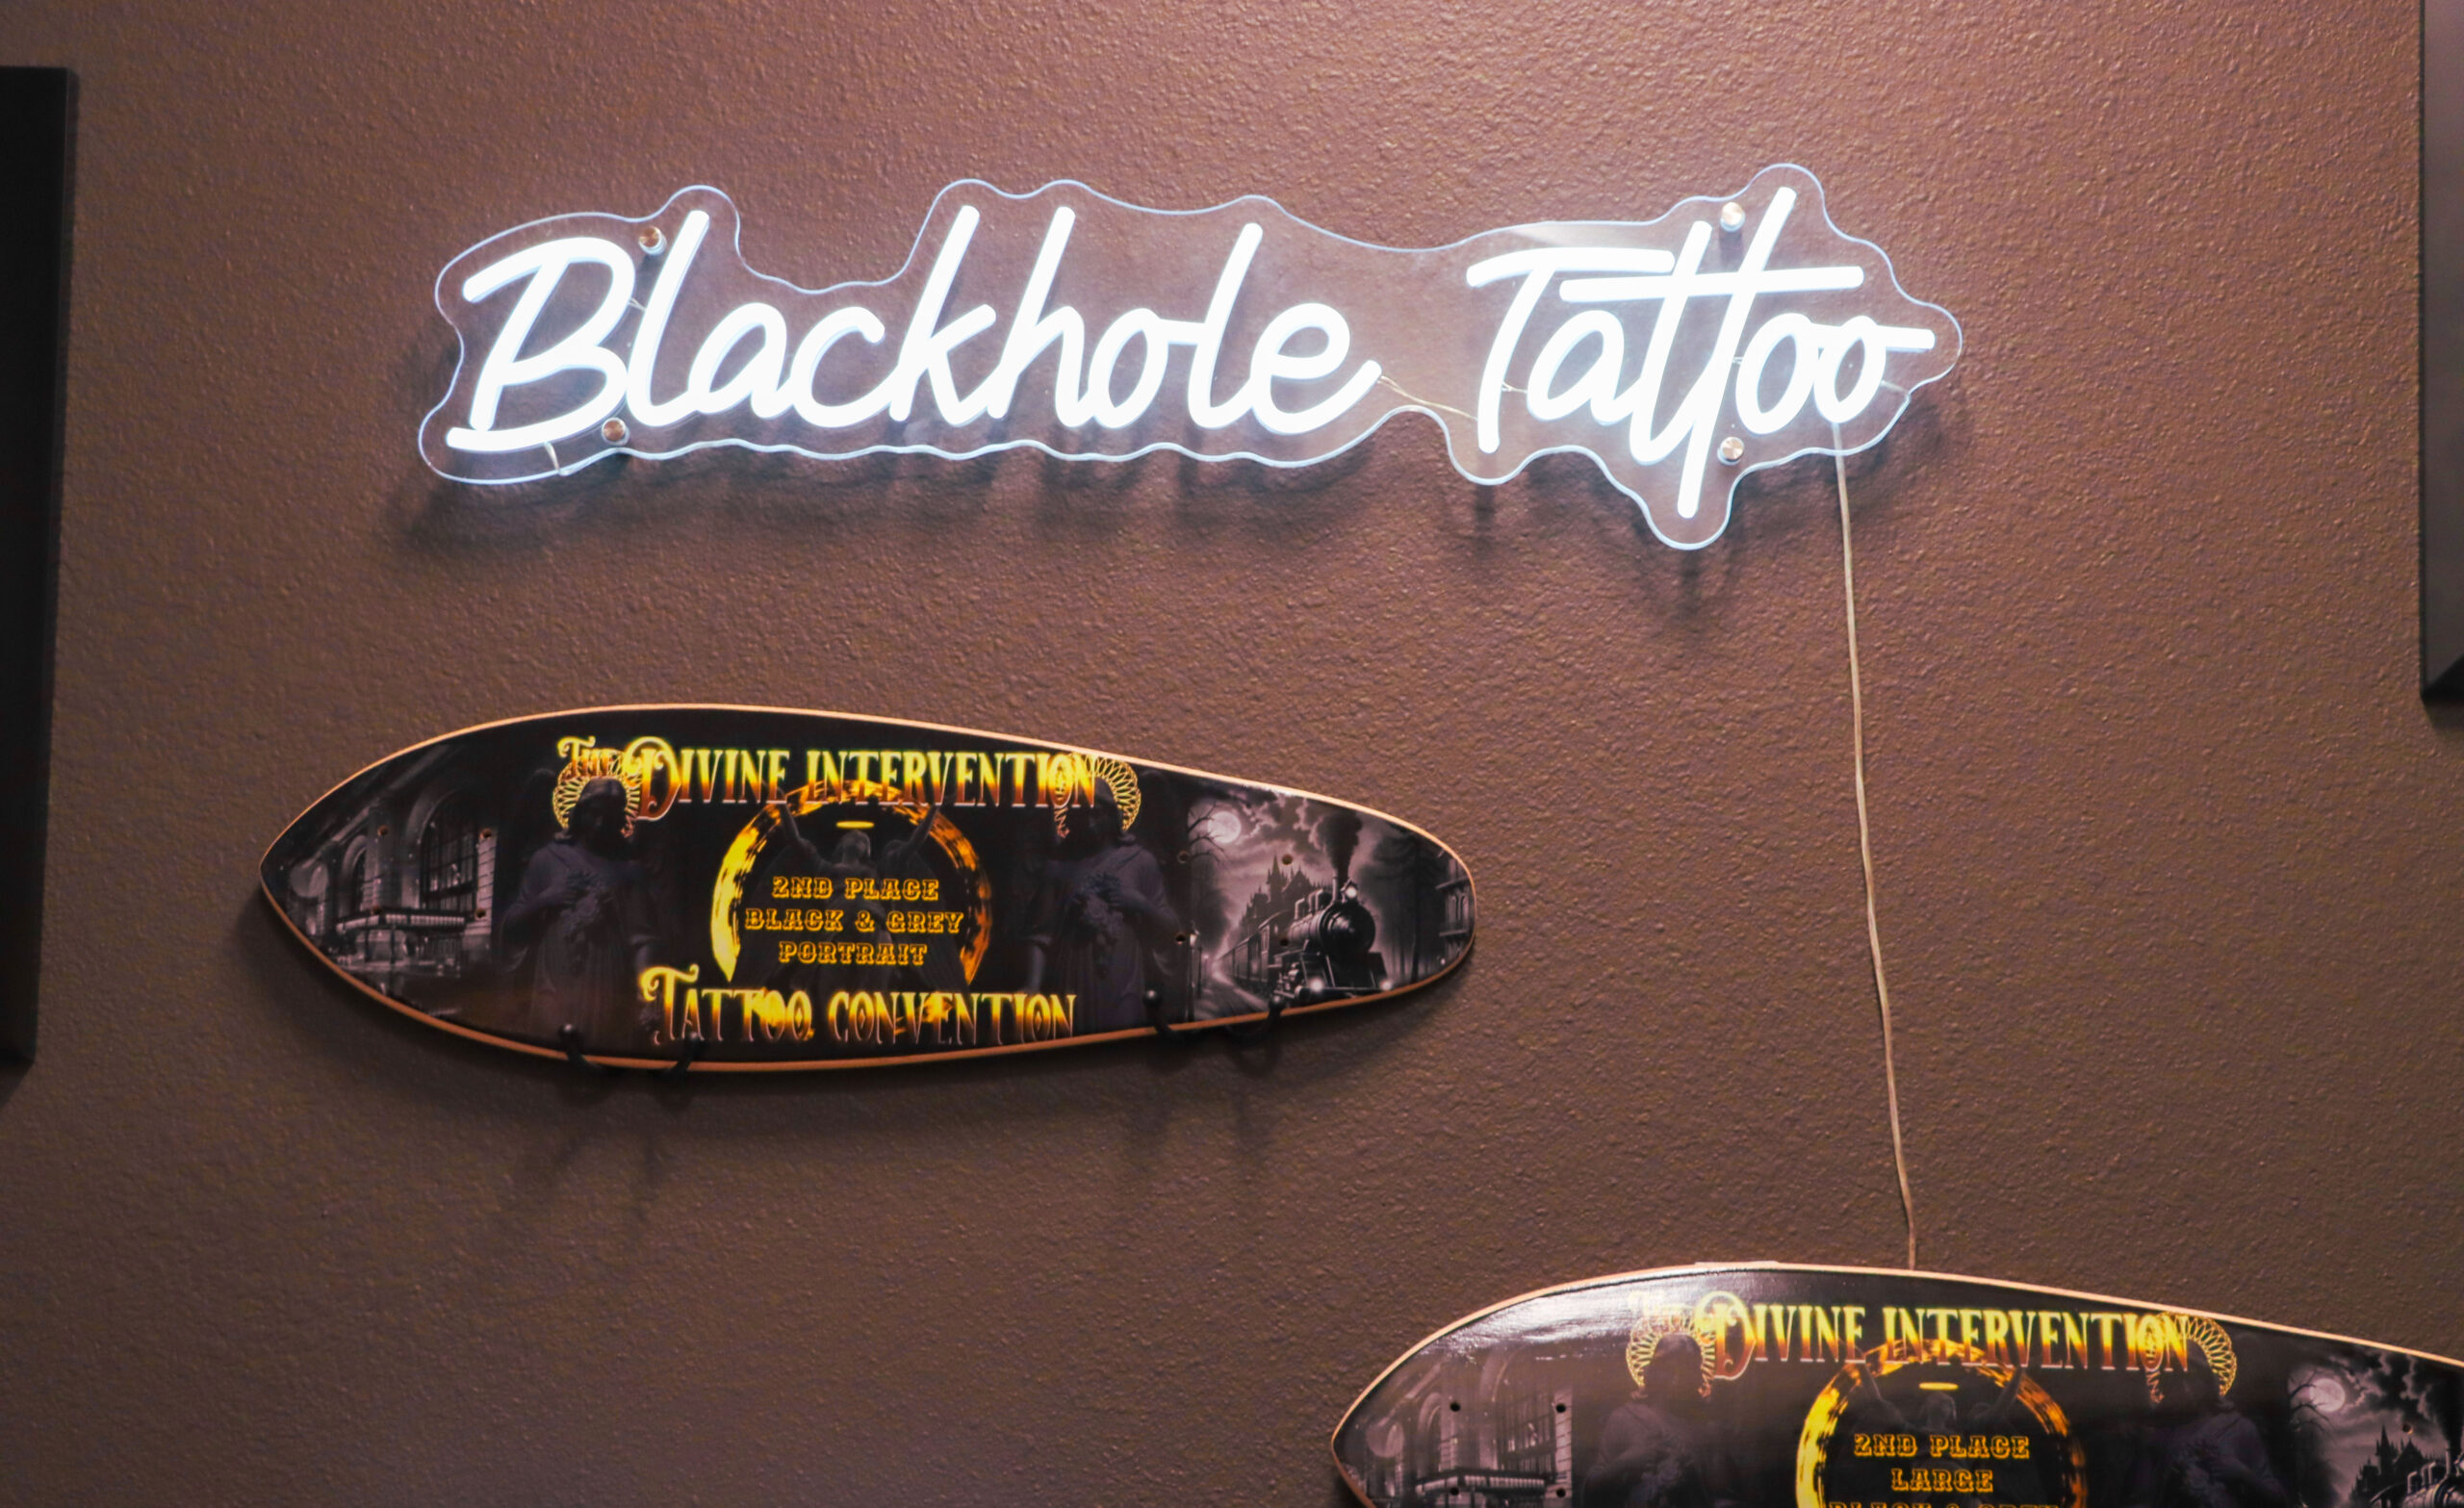 Blackhole Tattoo and Art in Meridian, Idaho.